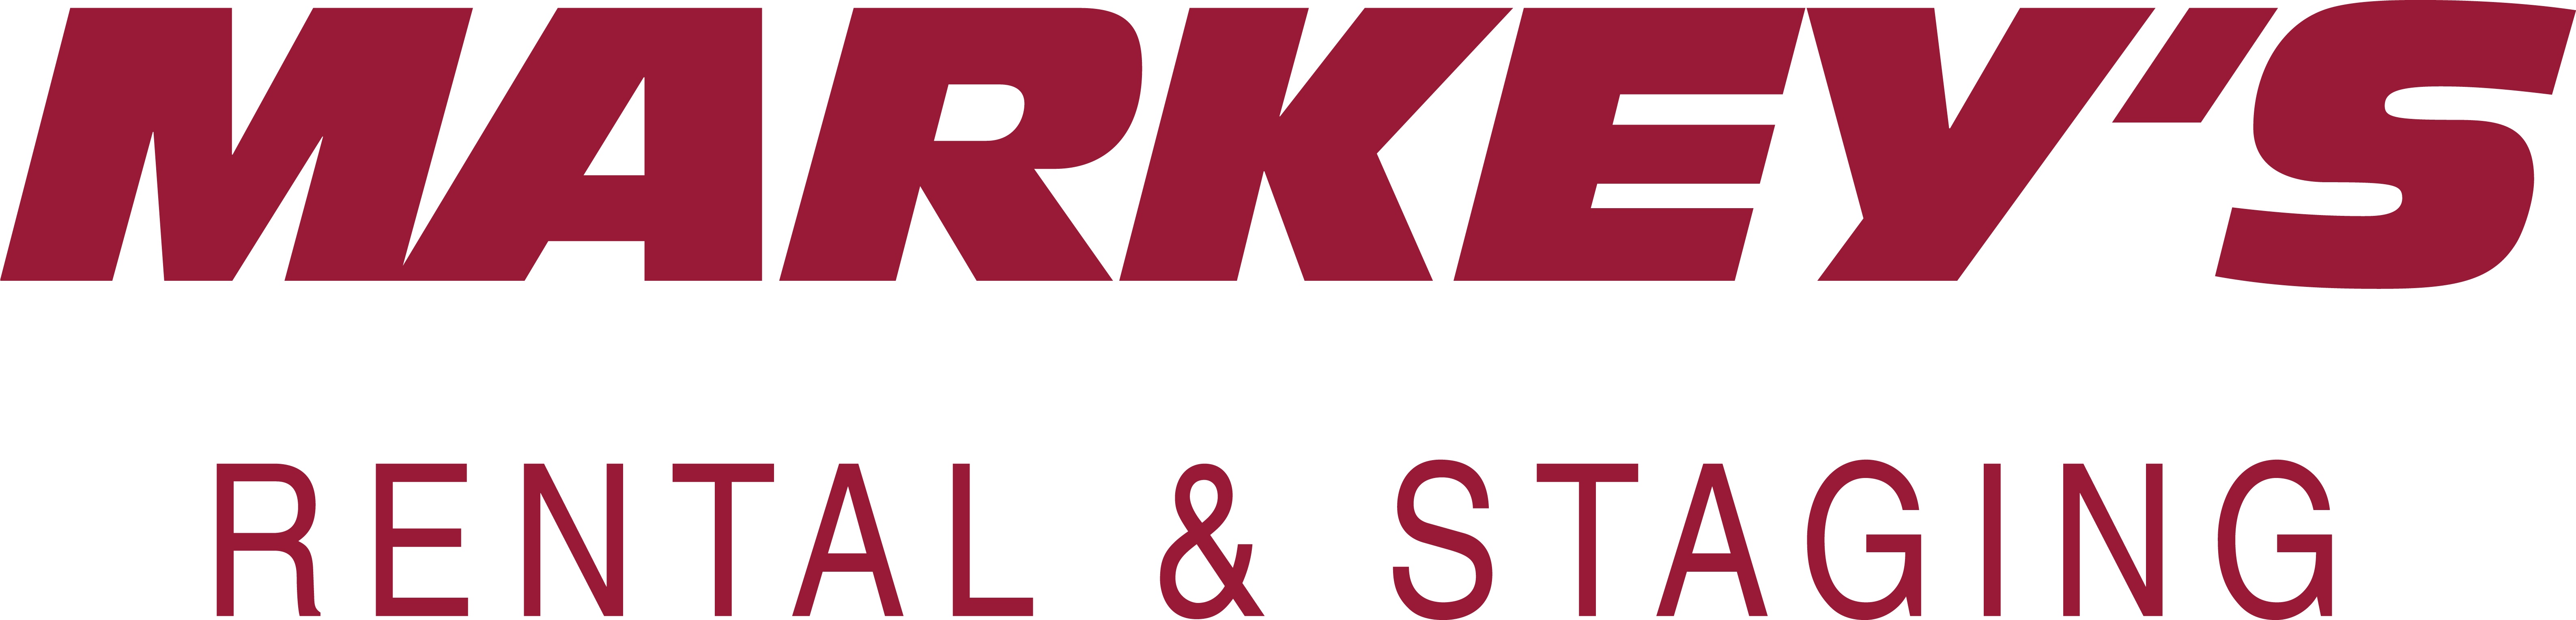 Markey's Rental & Staging - Logo